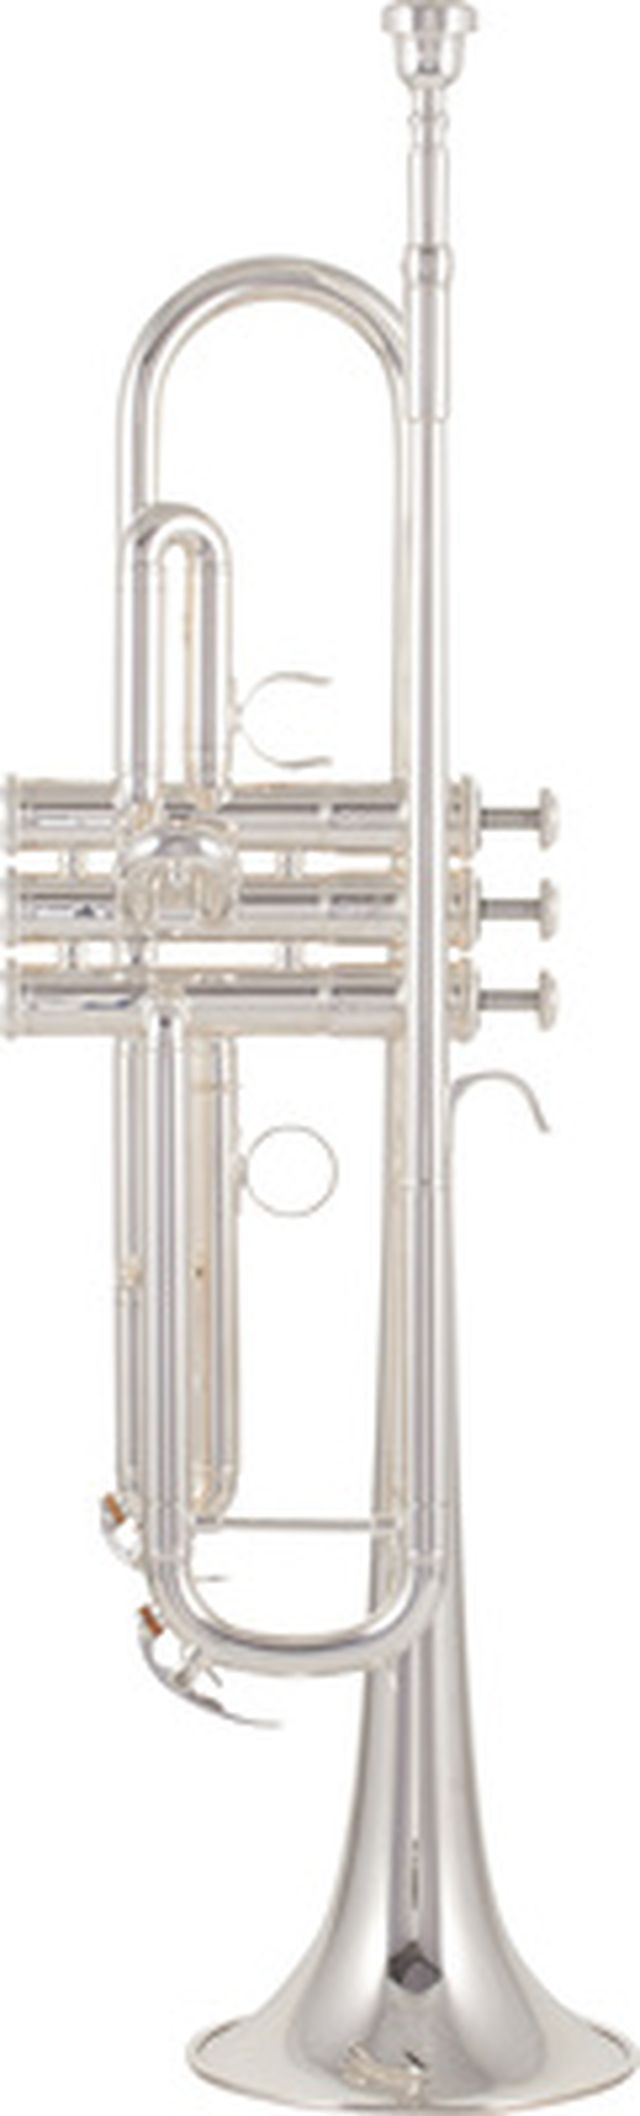 Yamaha YTR-4335 GSII Trumpet